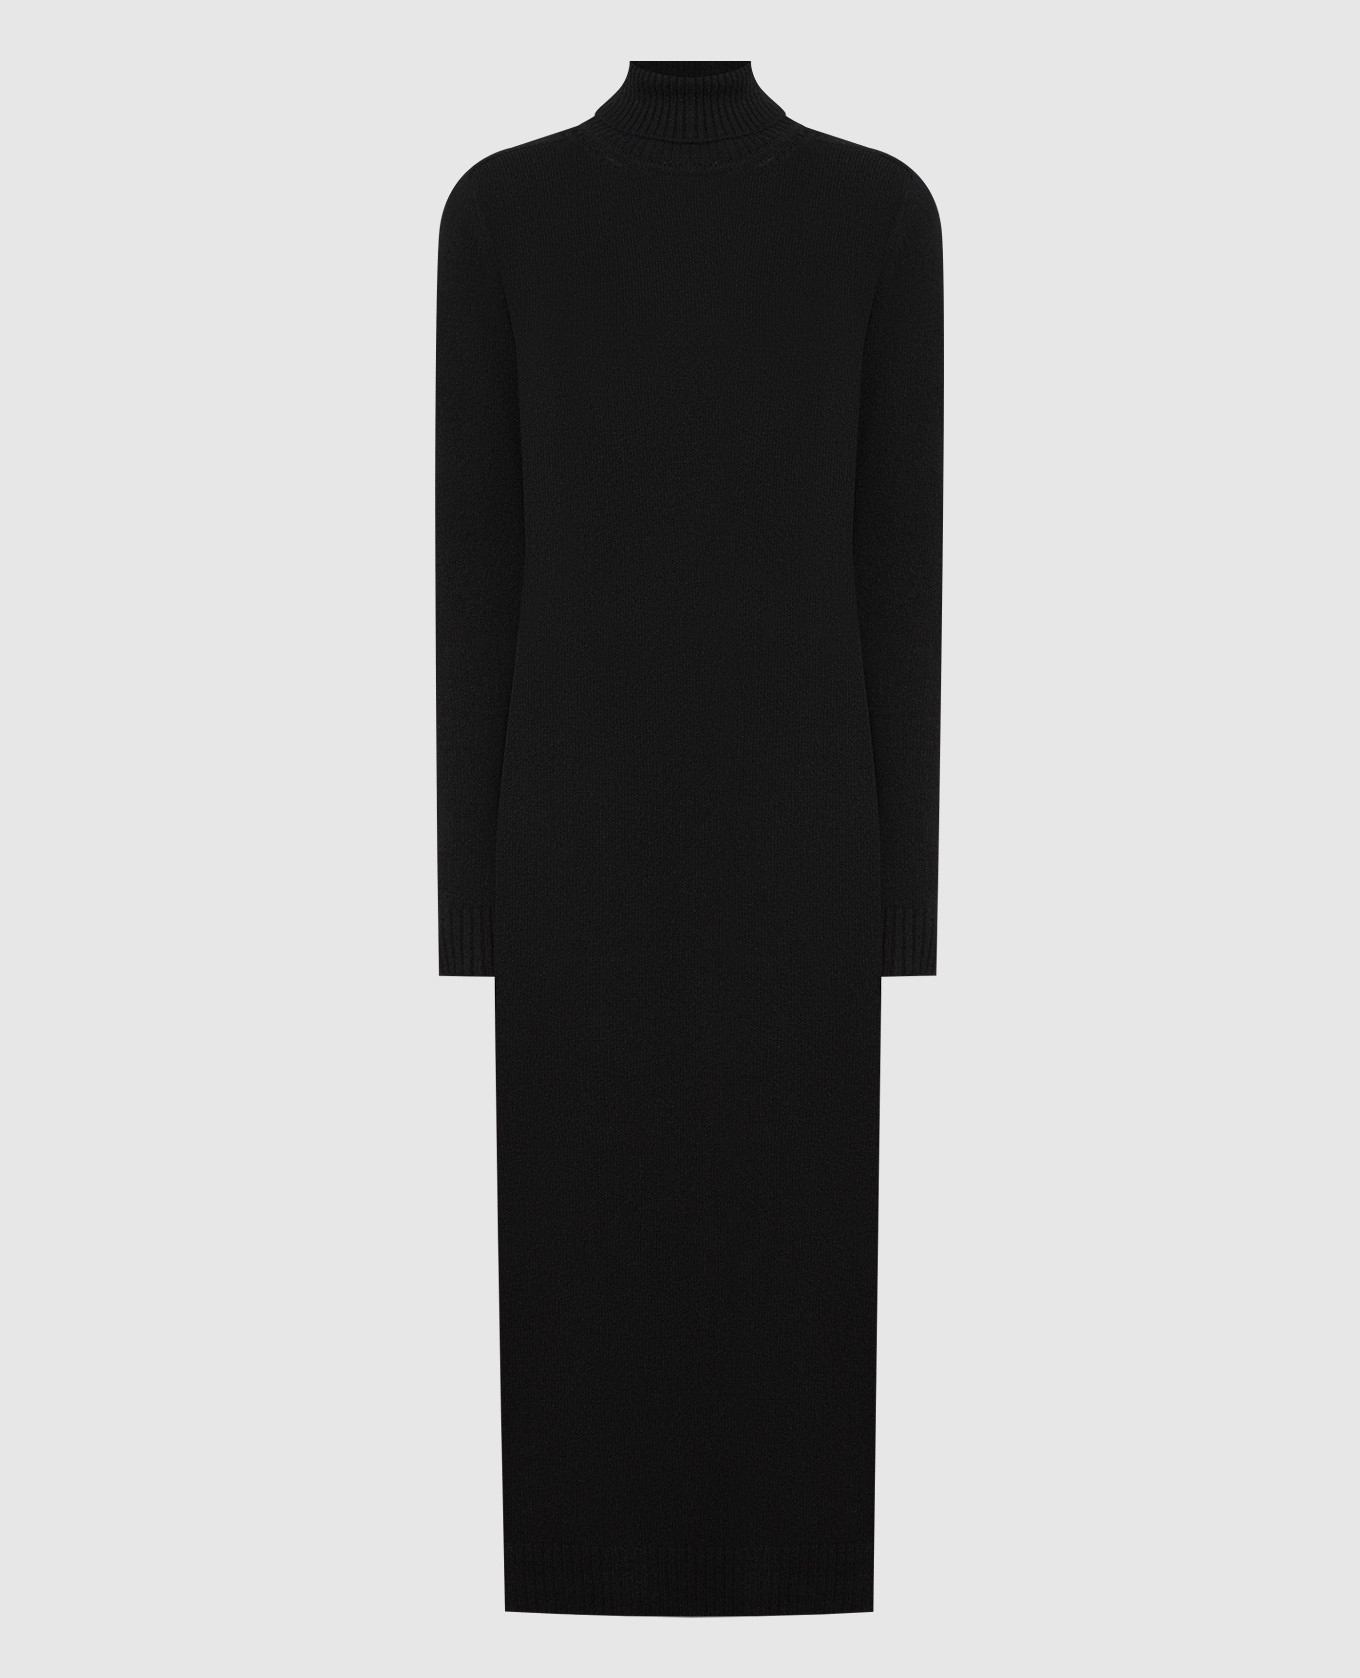 Black cashmere dress